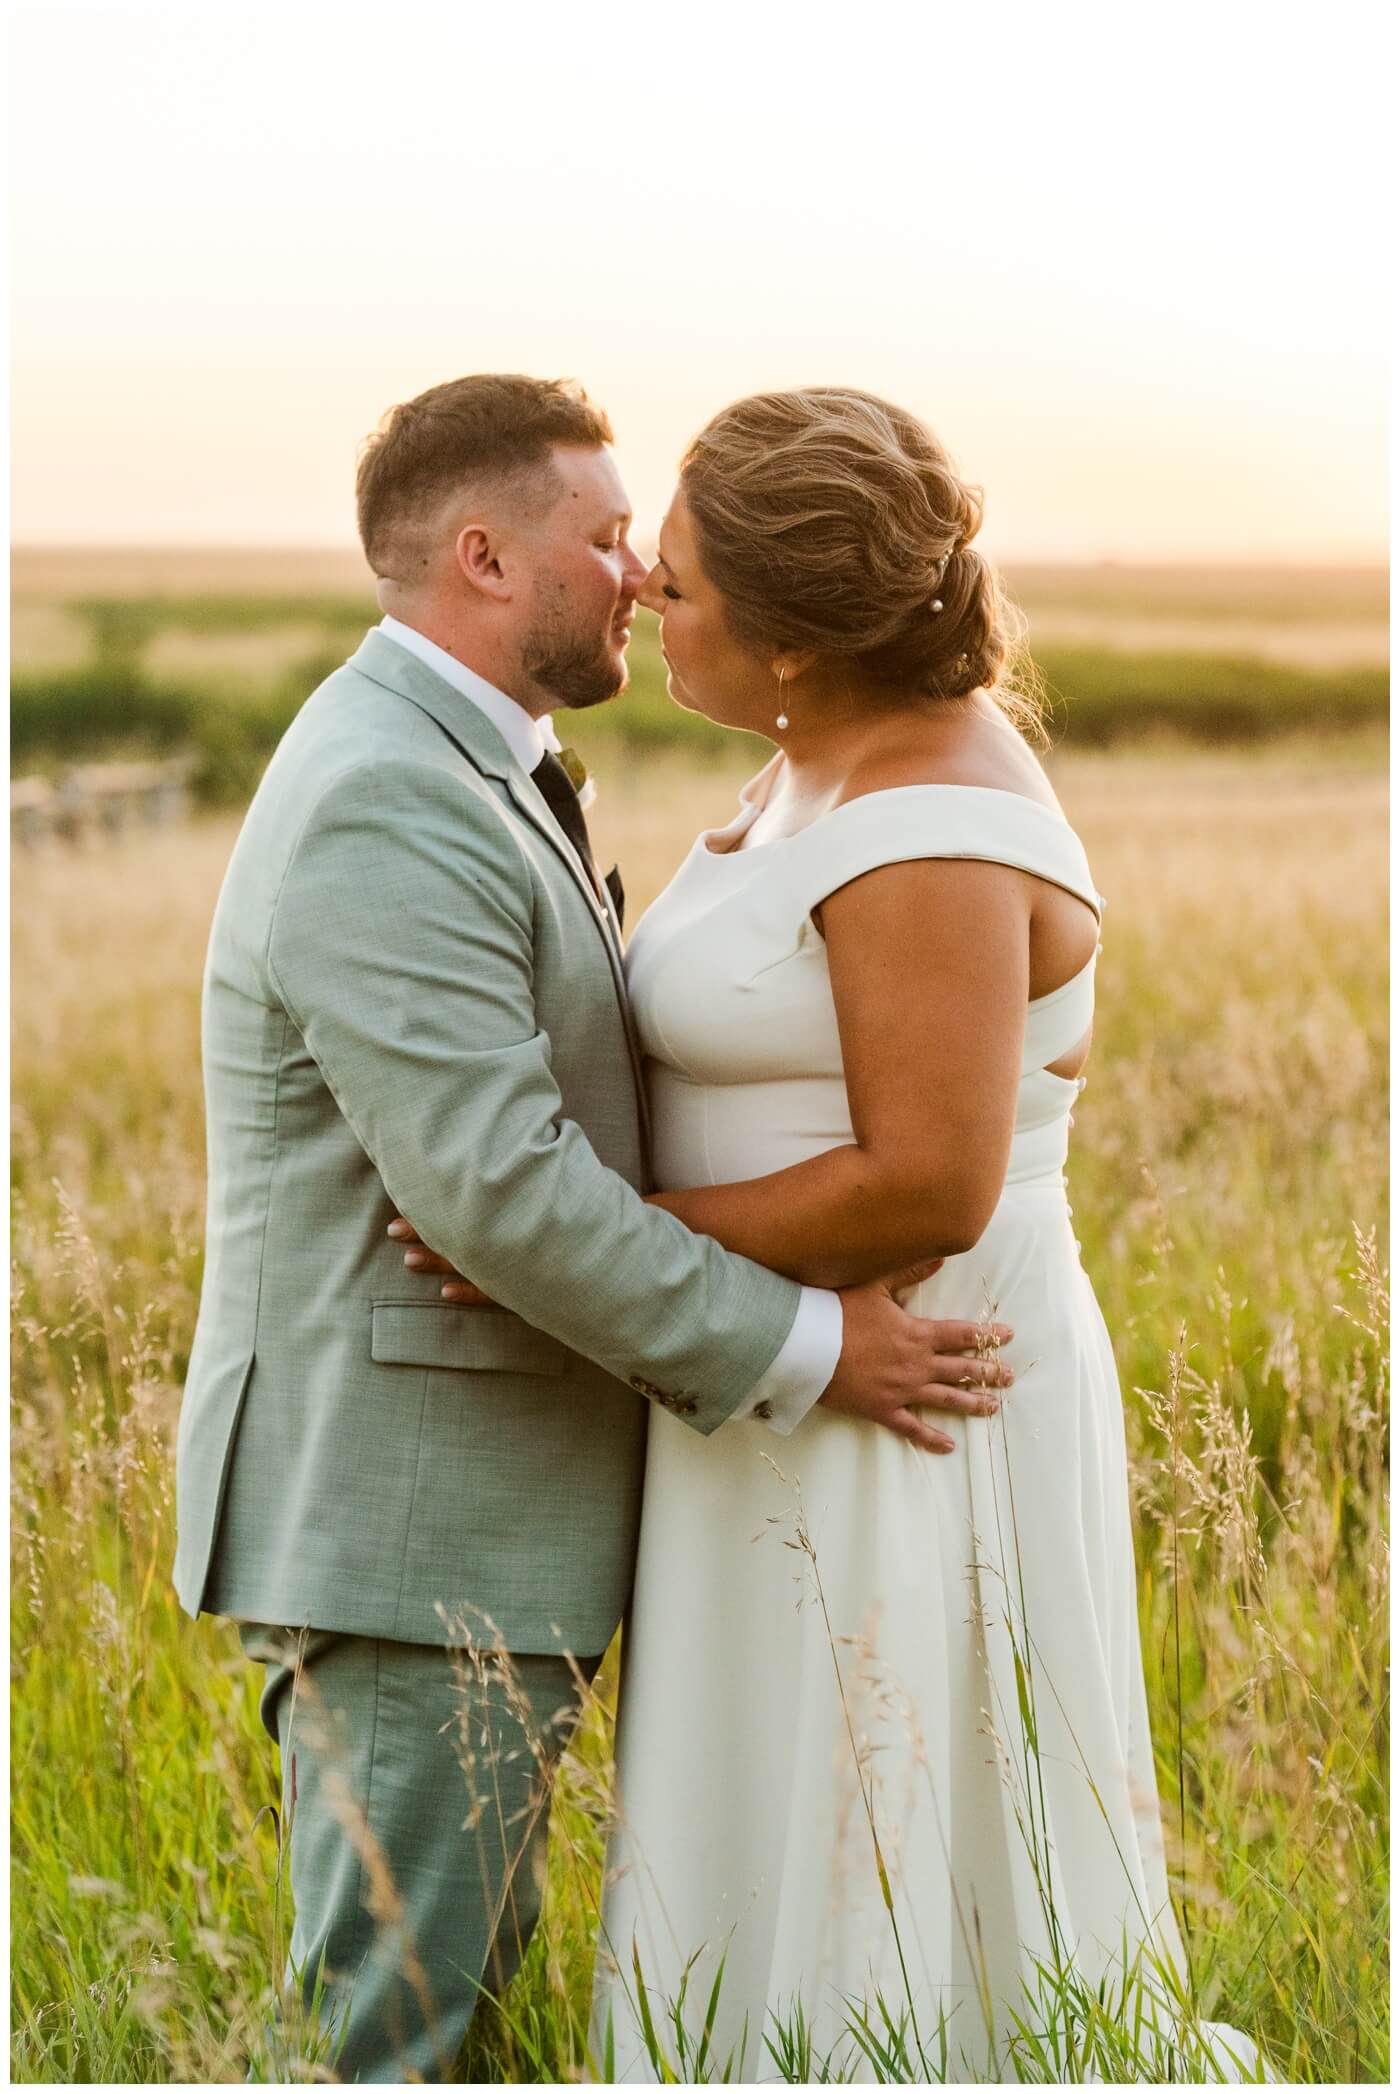 Declan & Katherine - 44 - Regina Wedding - Bride & groom kiss in field of tall grass